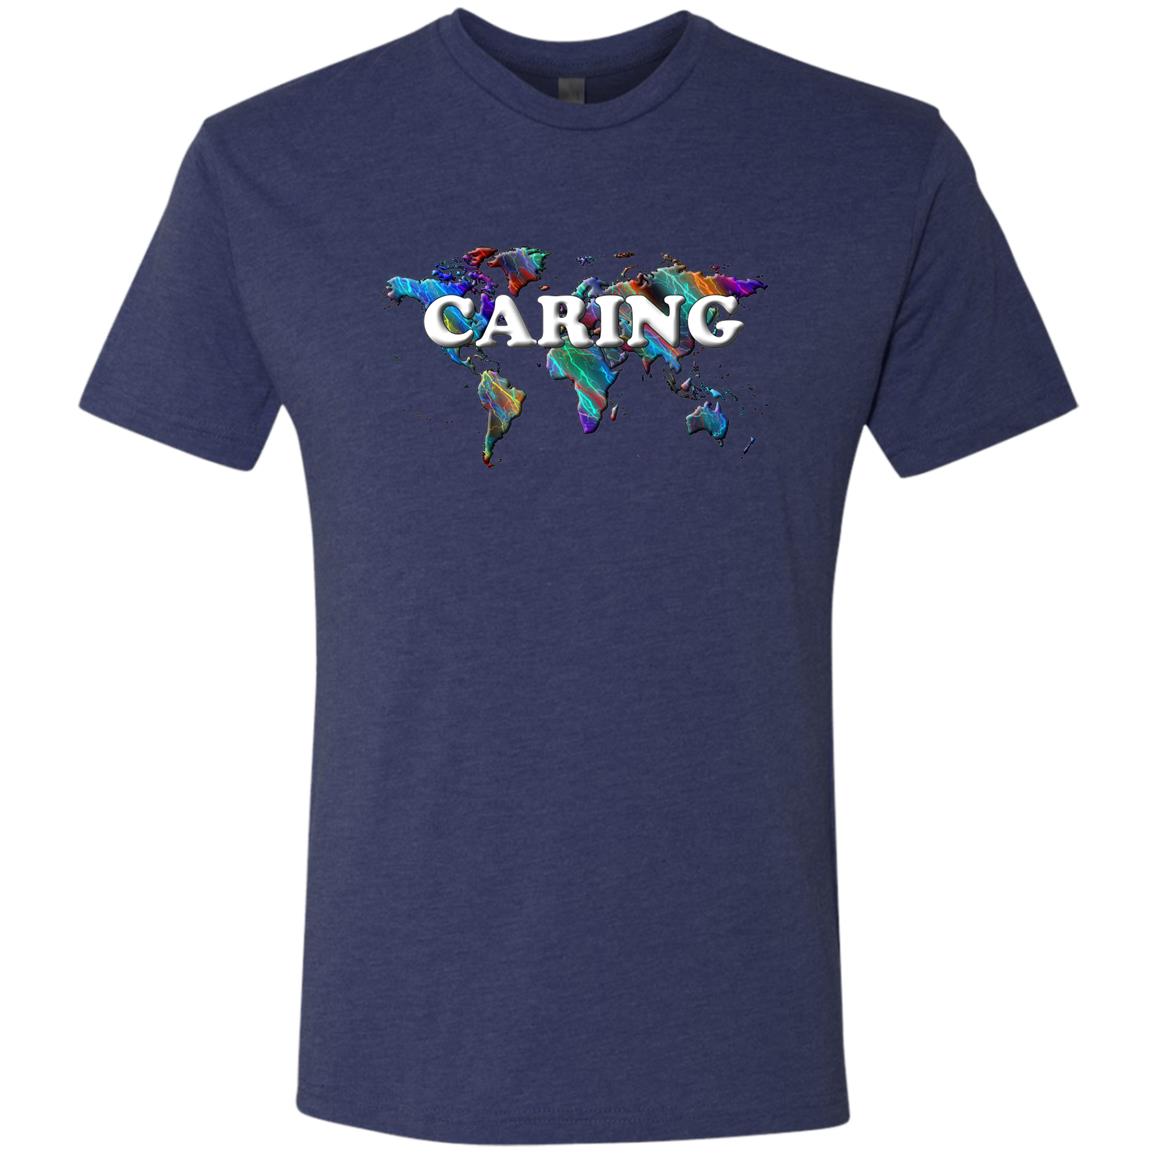 Caring Statement T-Shirt